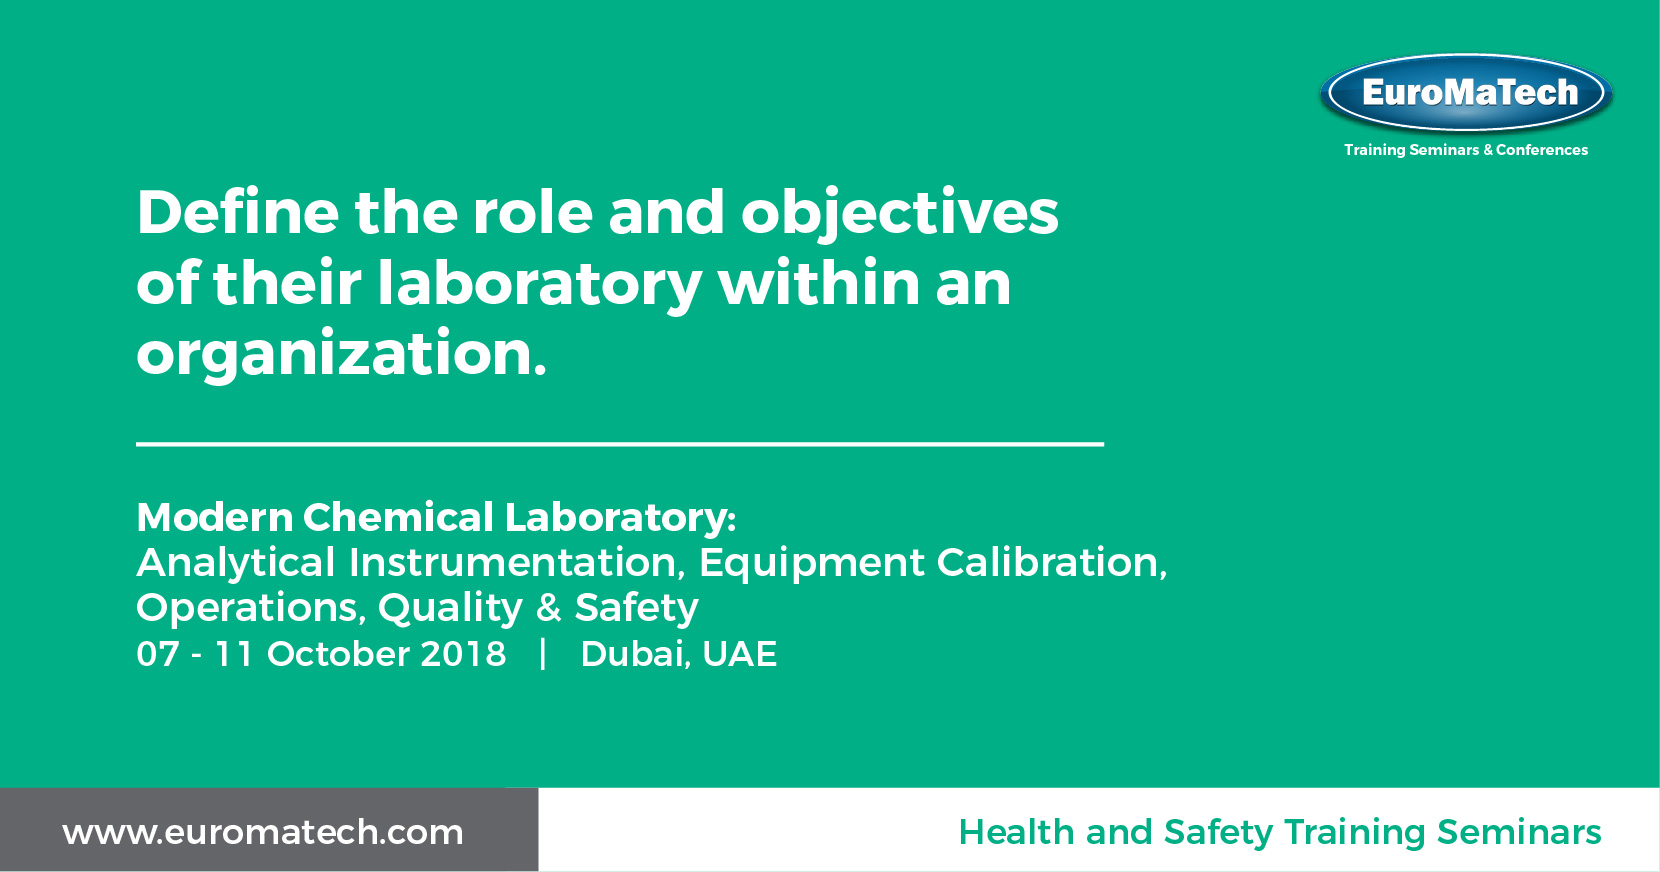 Modern Chemical Laboratory Training Course in Dubai